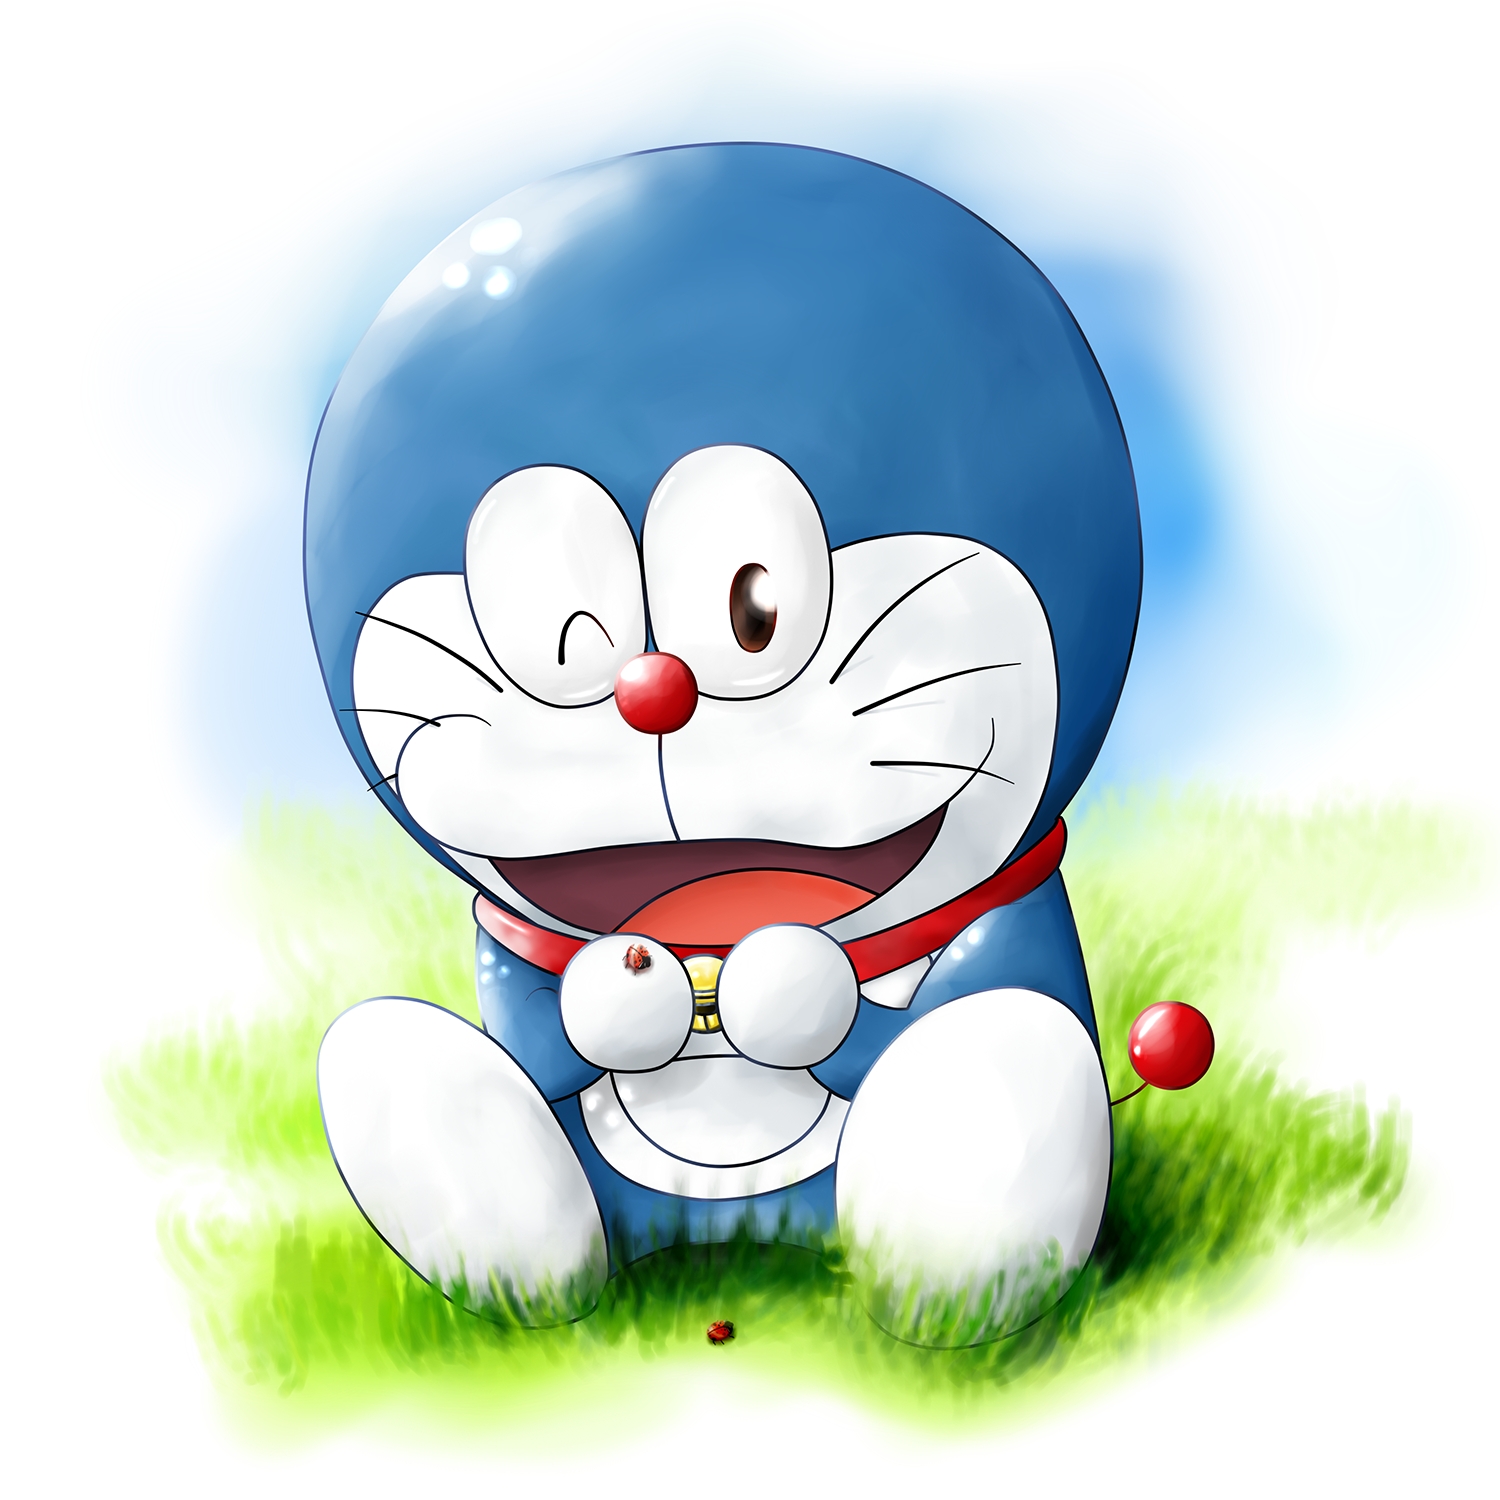  Gambar  Grafiti  Doraemon  Sobgrafiti